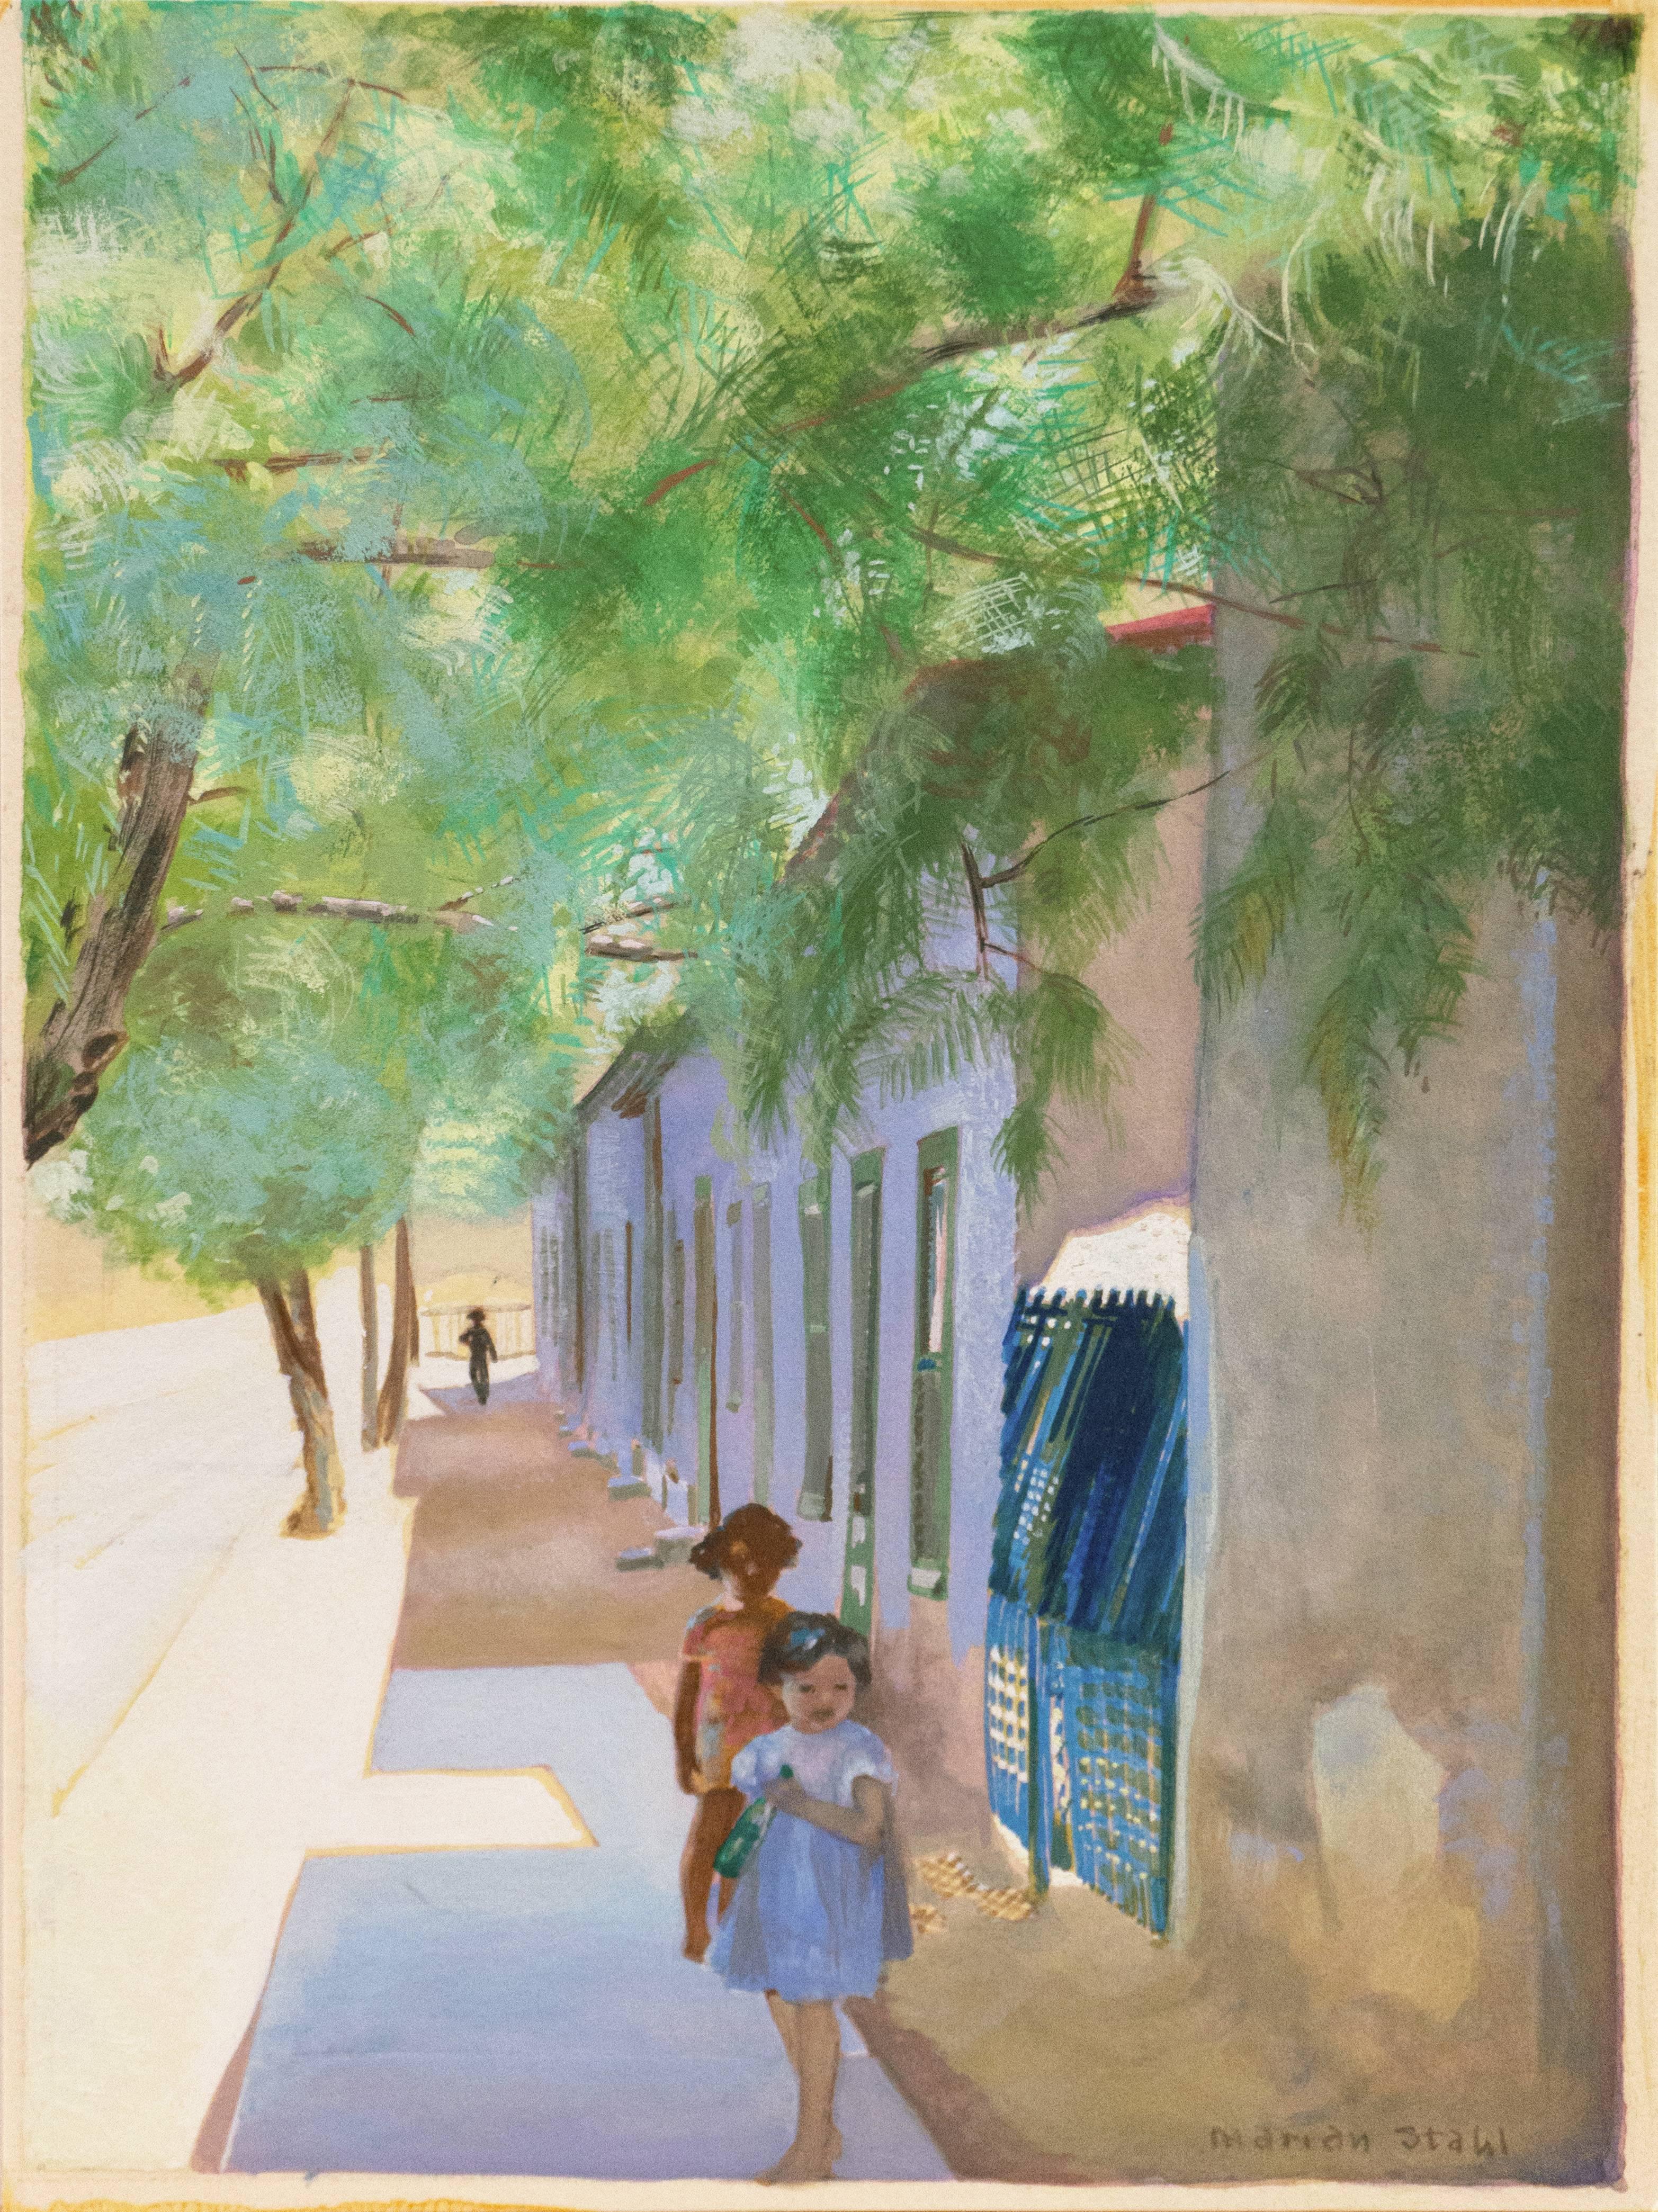 'In the Shade of La Casa Cordova, Tucson', Meyer Street, Arizona - Painting by Marian Stahl